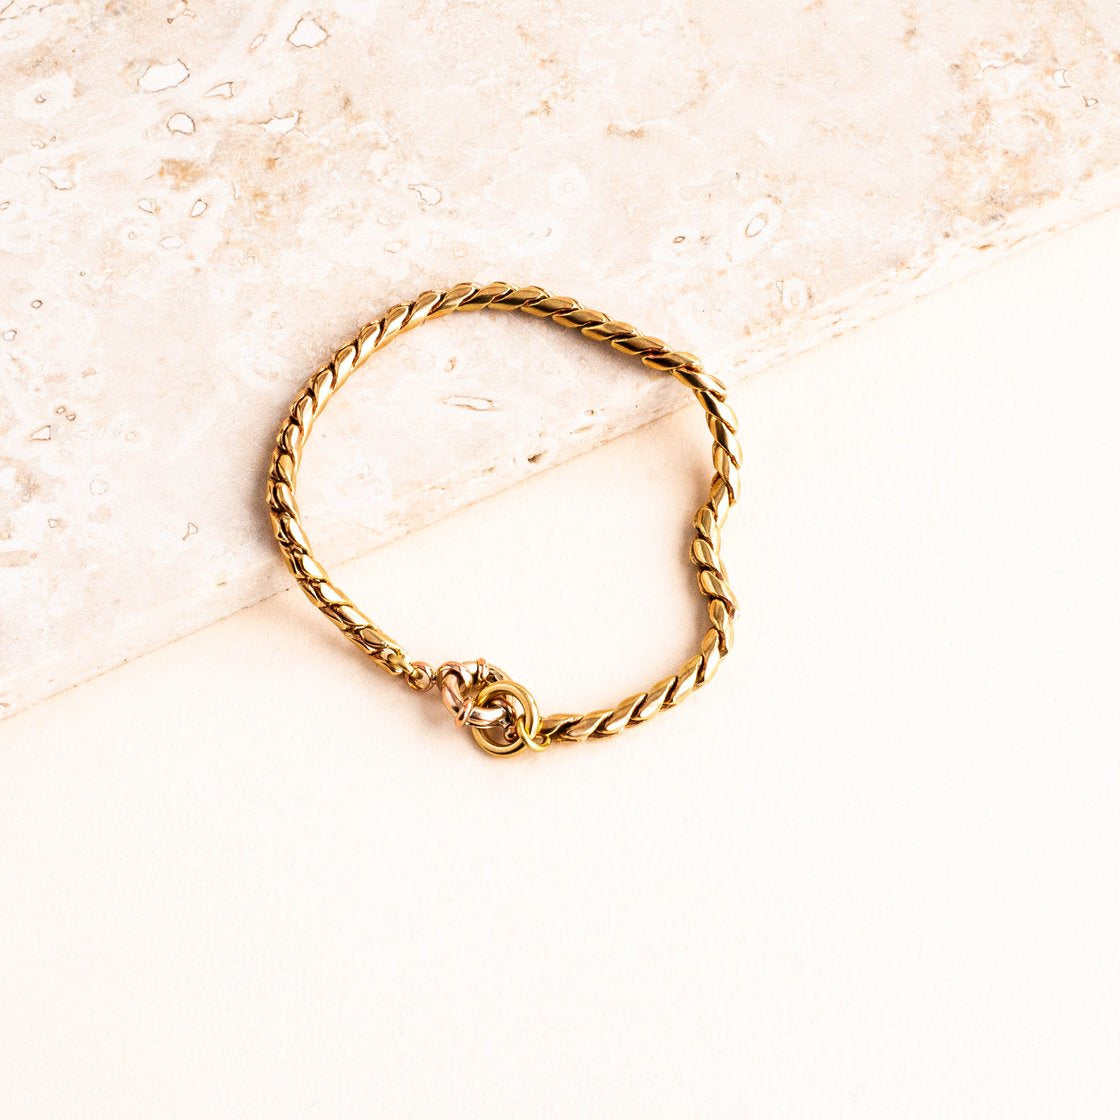 The Spiral Link Bracelet by Michelle Starbuck Designs